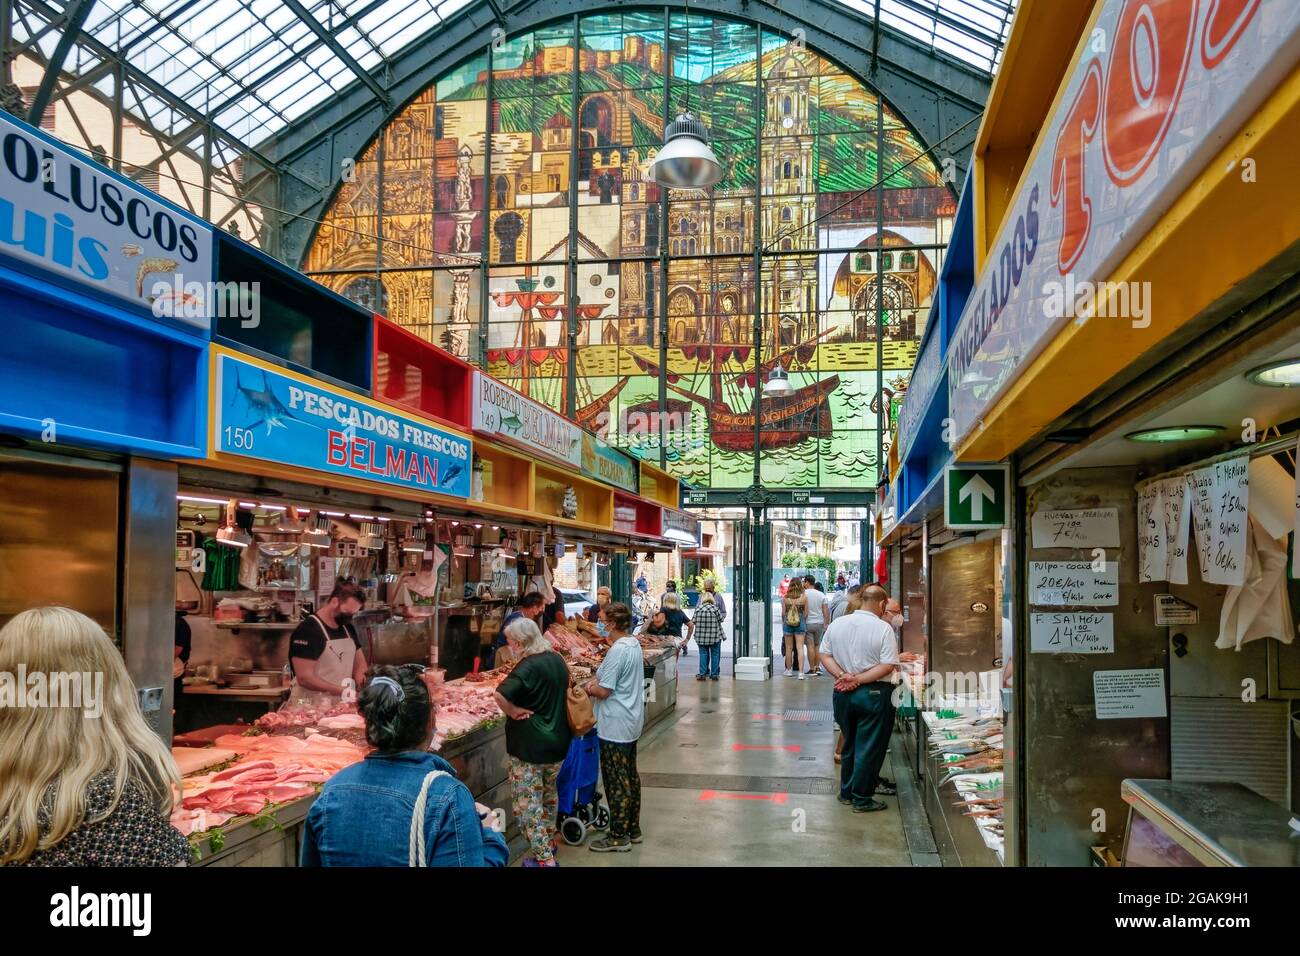 Mercado Central de Atarazanas, traditionelle Markthalle mit großer Auswahl an Lebensmitteln und Tapasbars, , Malaga, Costa del Sol, Provinz Malaga, An Stock Photo